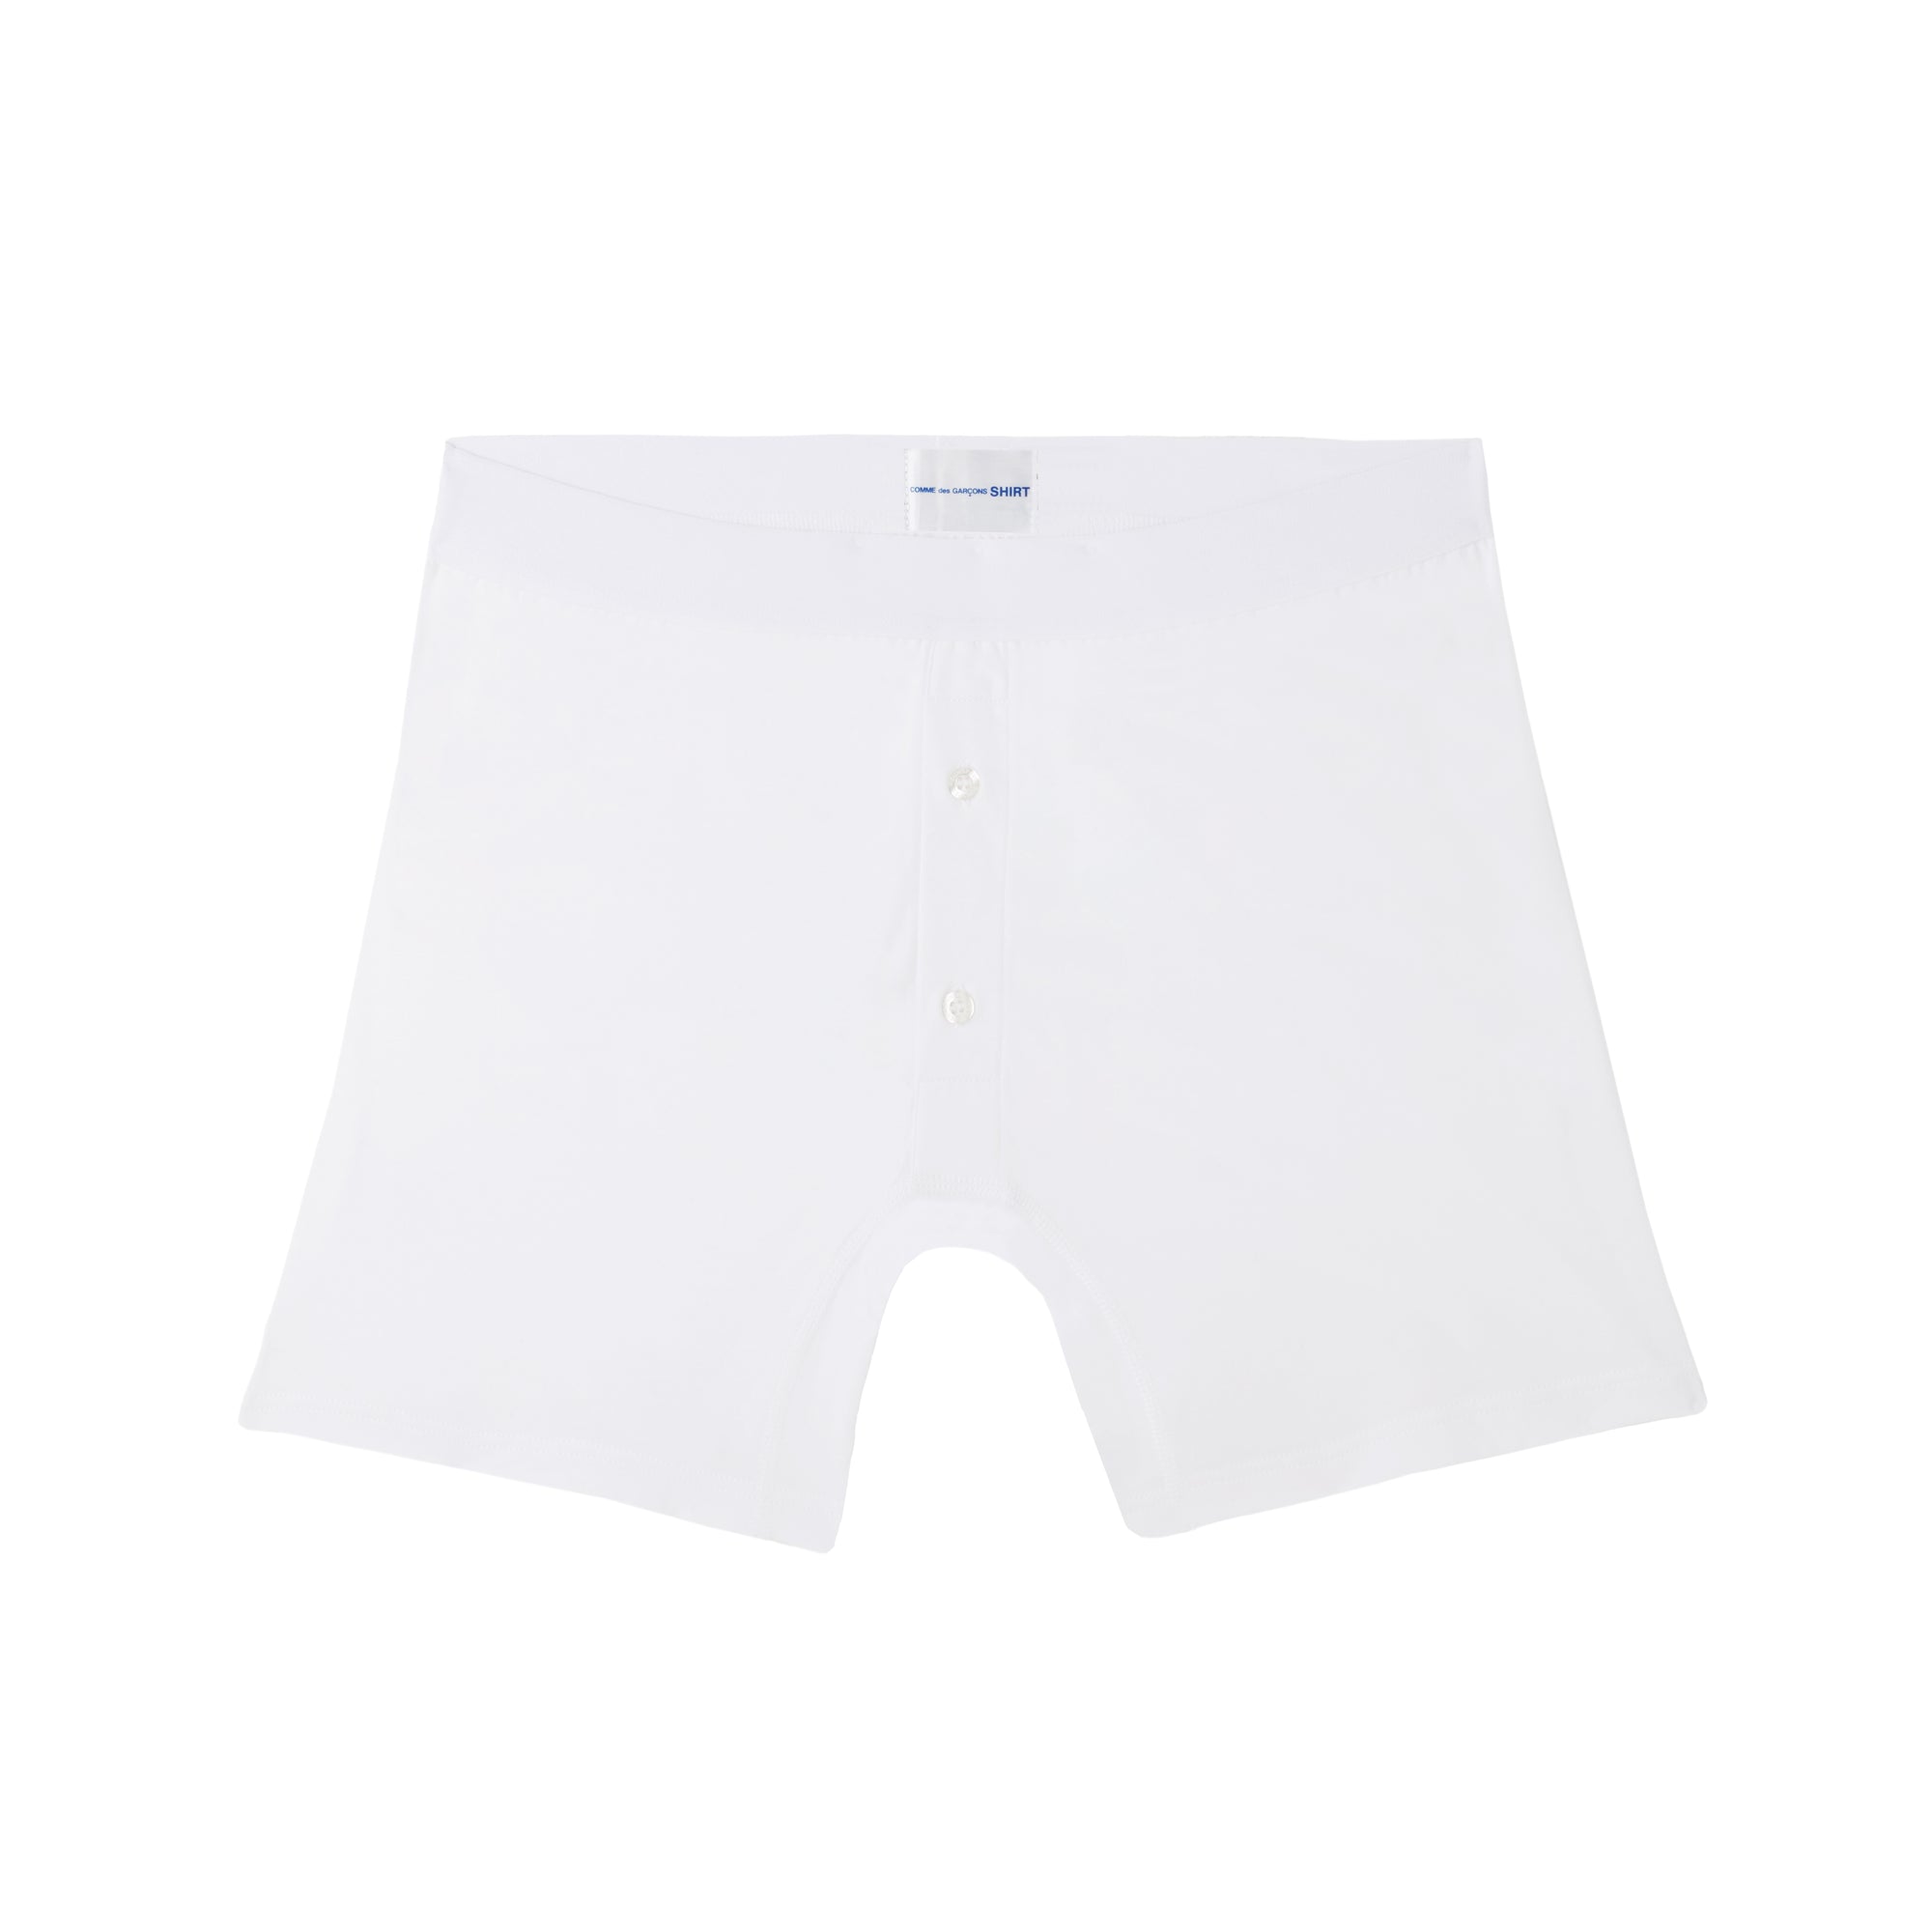 CDG SHIRT Underwear - Sunspel Two Button Boxer - (White) view 1